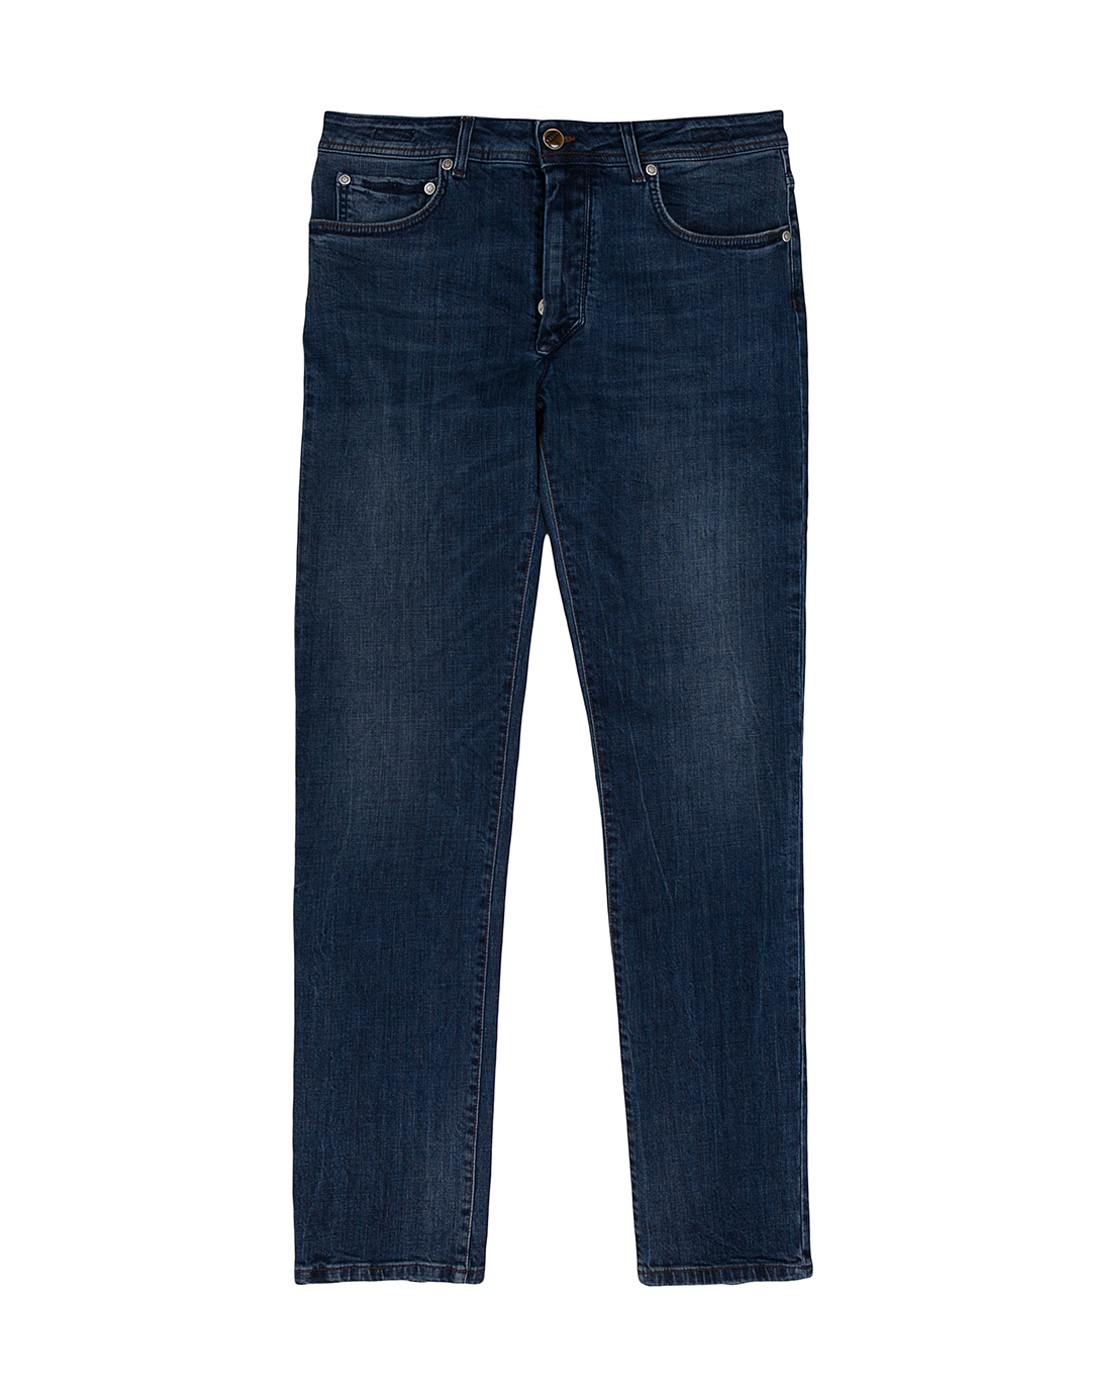 Мужские синие джинсы Barba SJFIVE 14477-1